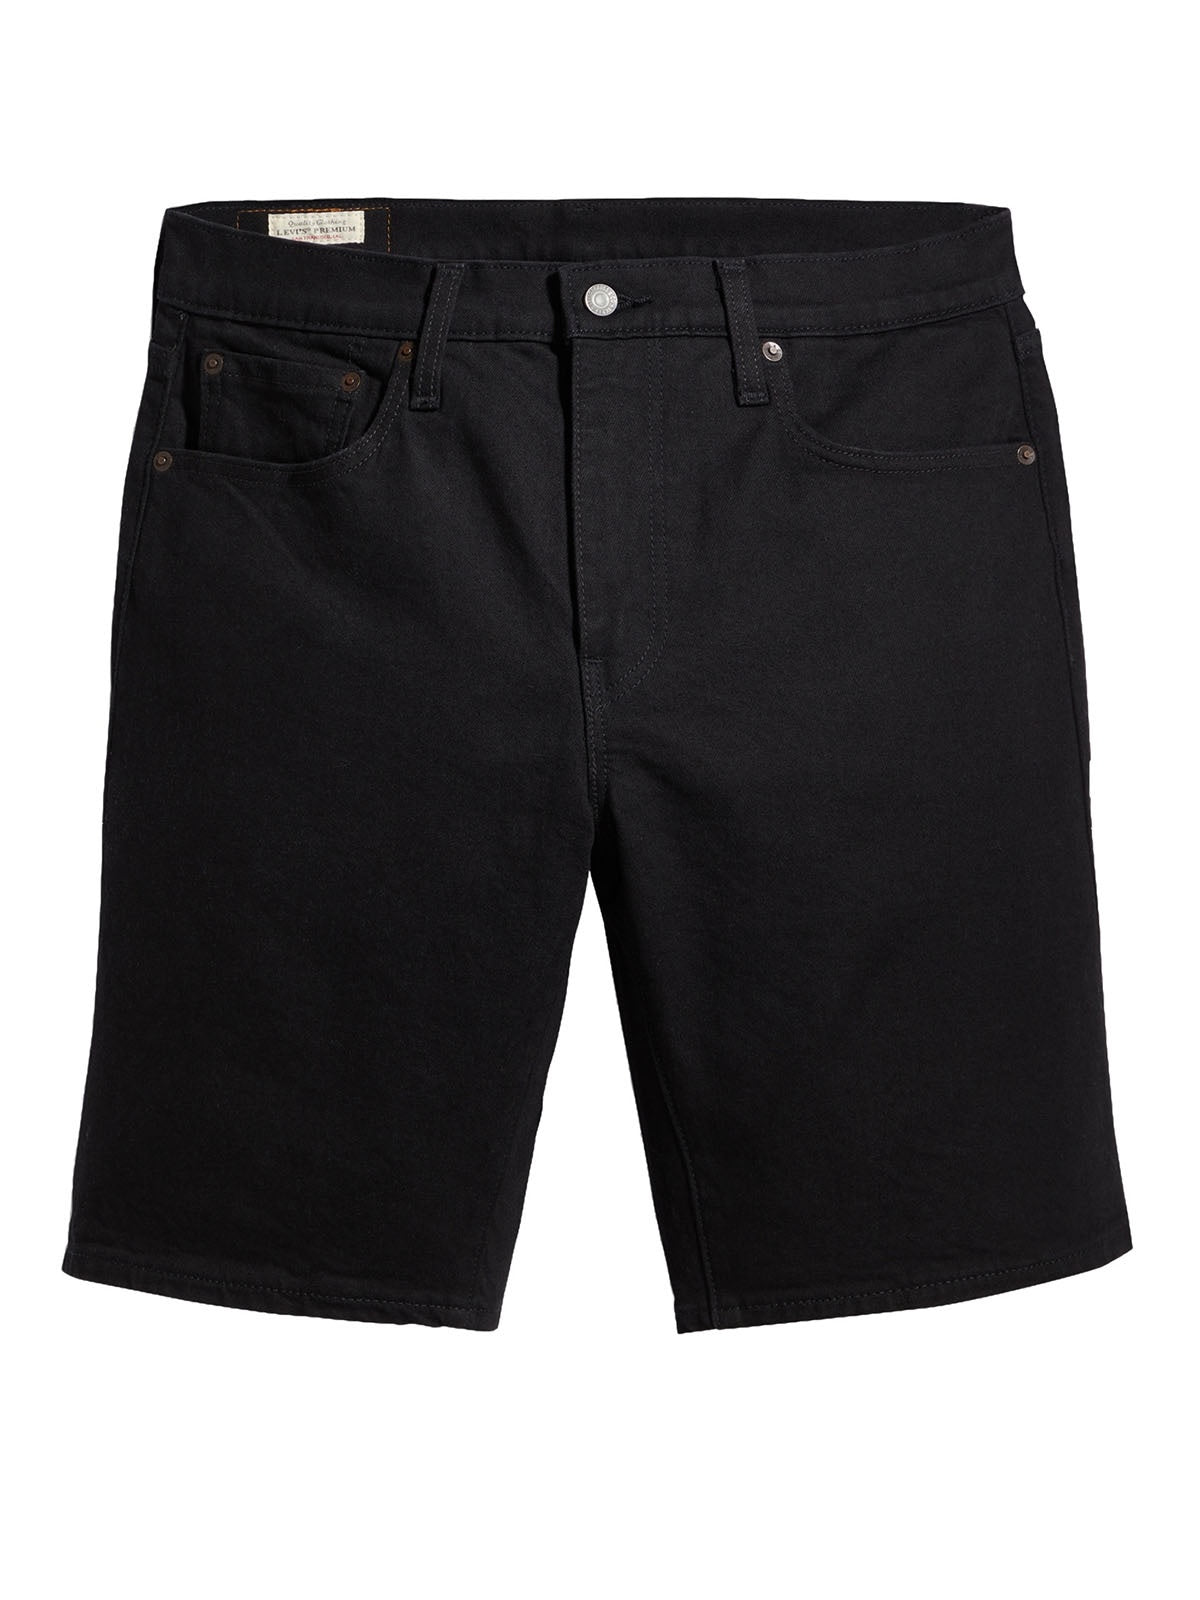 Levi's Men's Bermuda - 405 Standard Short - Black